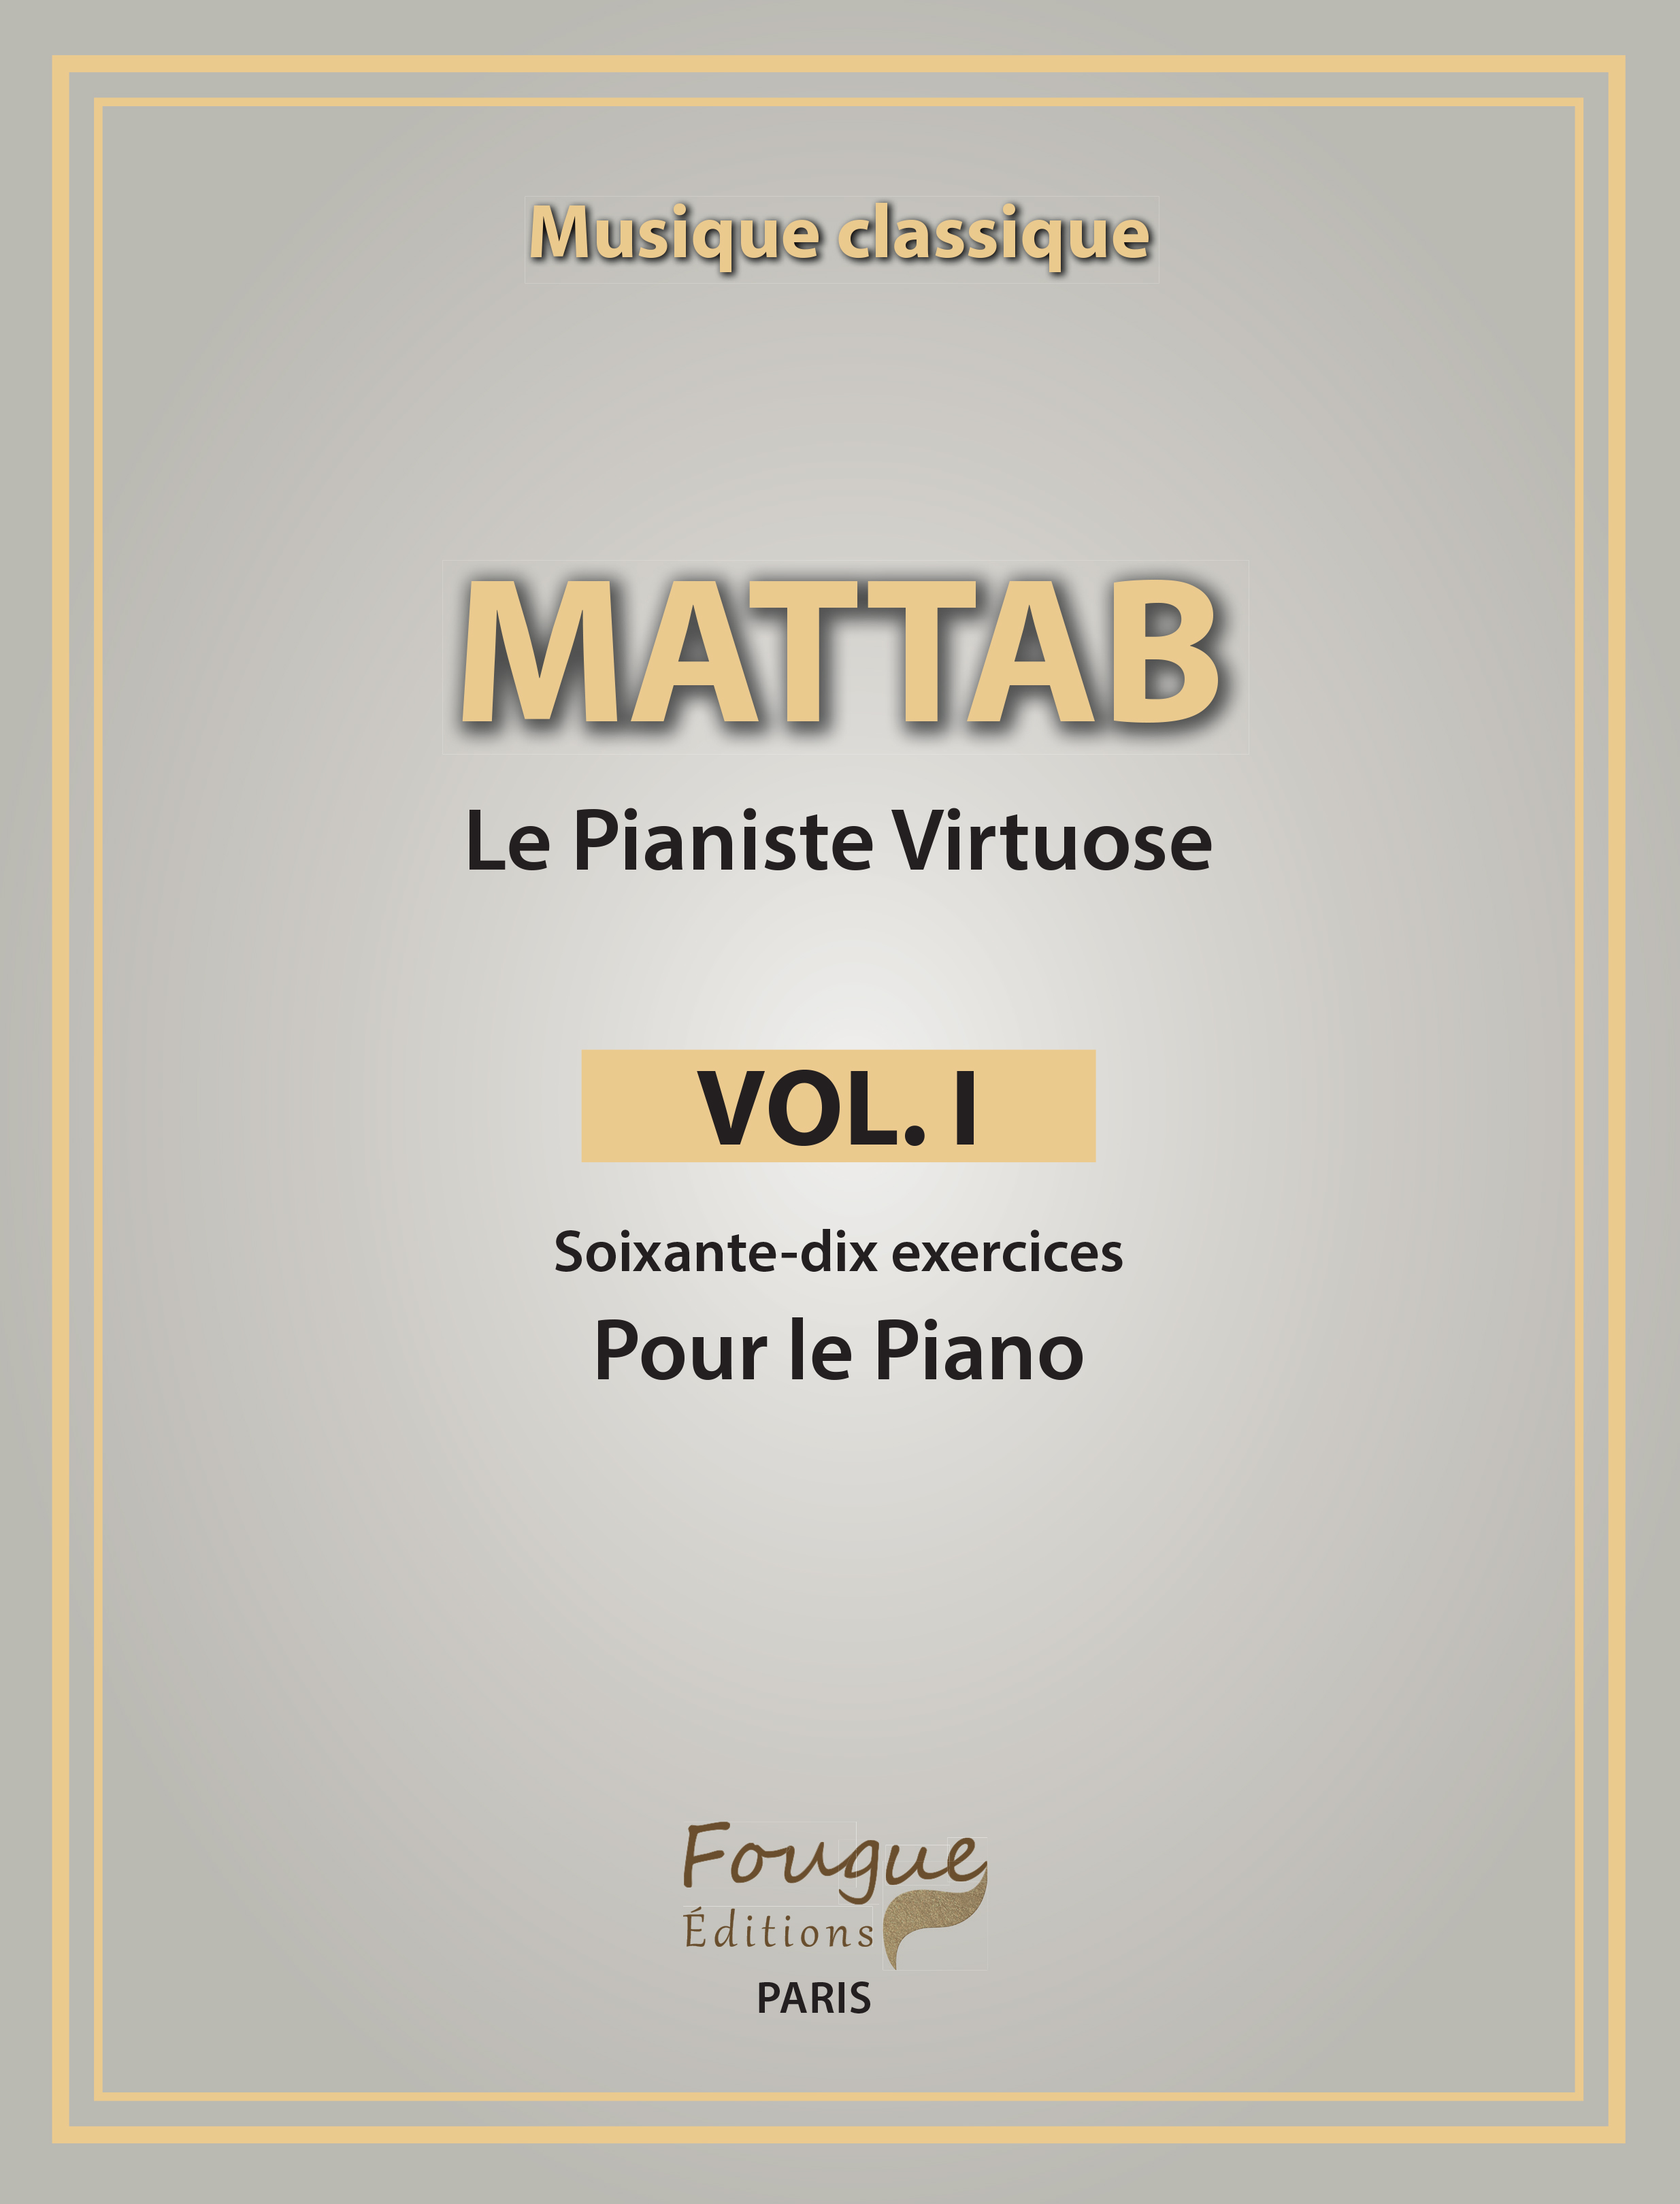 Le Pianiste VIrtuose Vol.1 (MATTAB MATHIE)